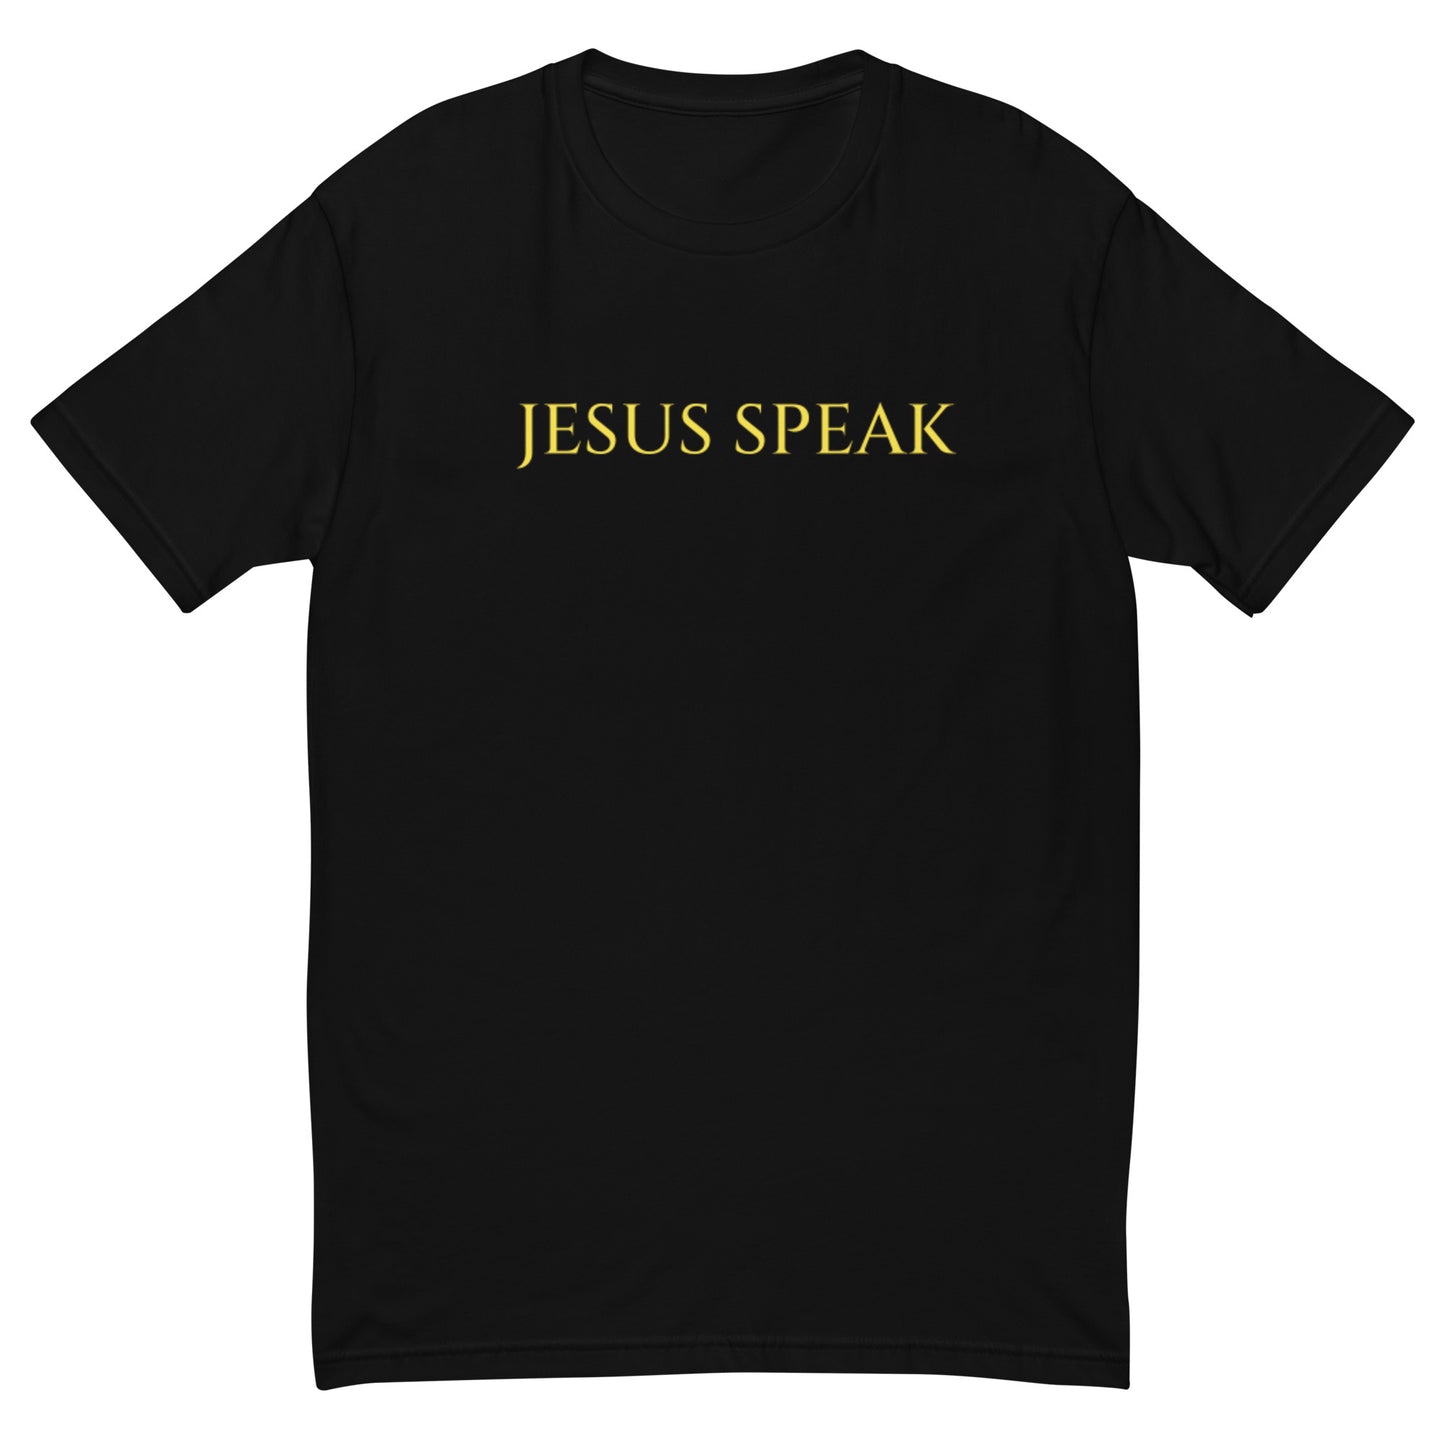 JESUS SPEAK ALBUM ART Short Sleeve T-shirt